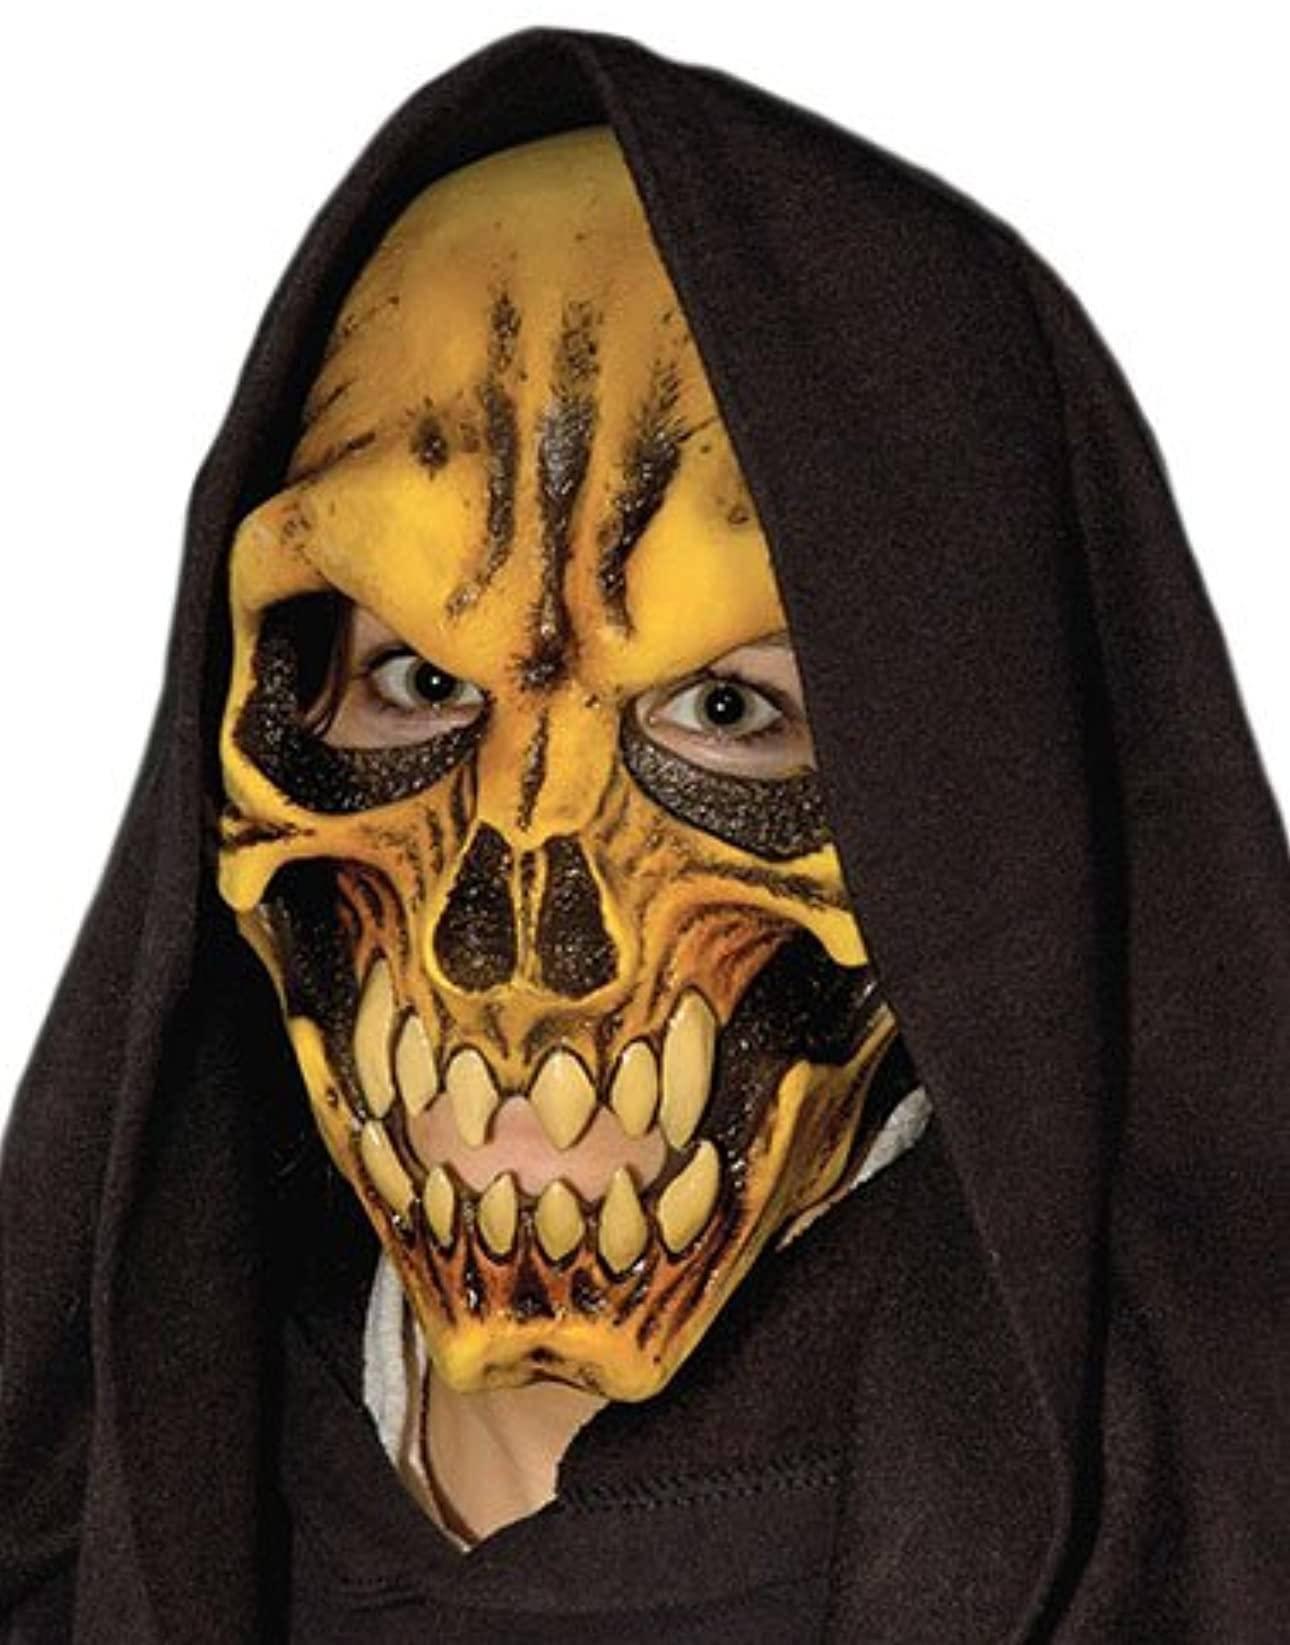 Zagone Studios Dem Bones Demon Skull Adult Latex Costume Mask